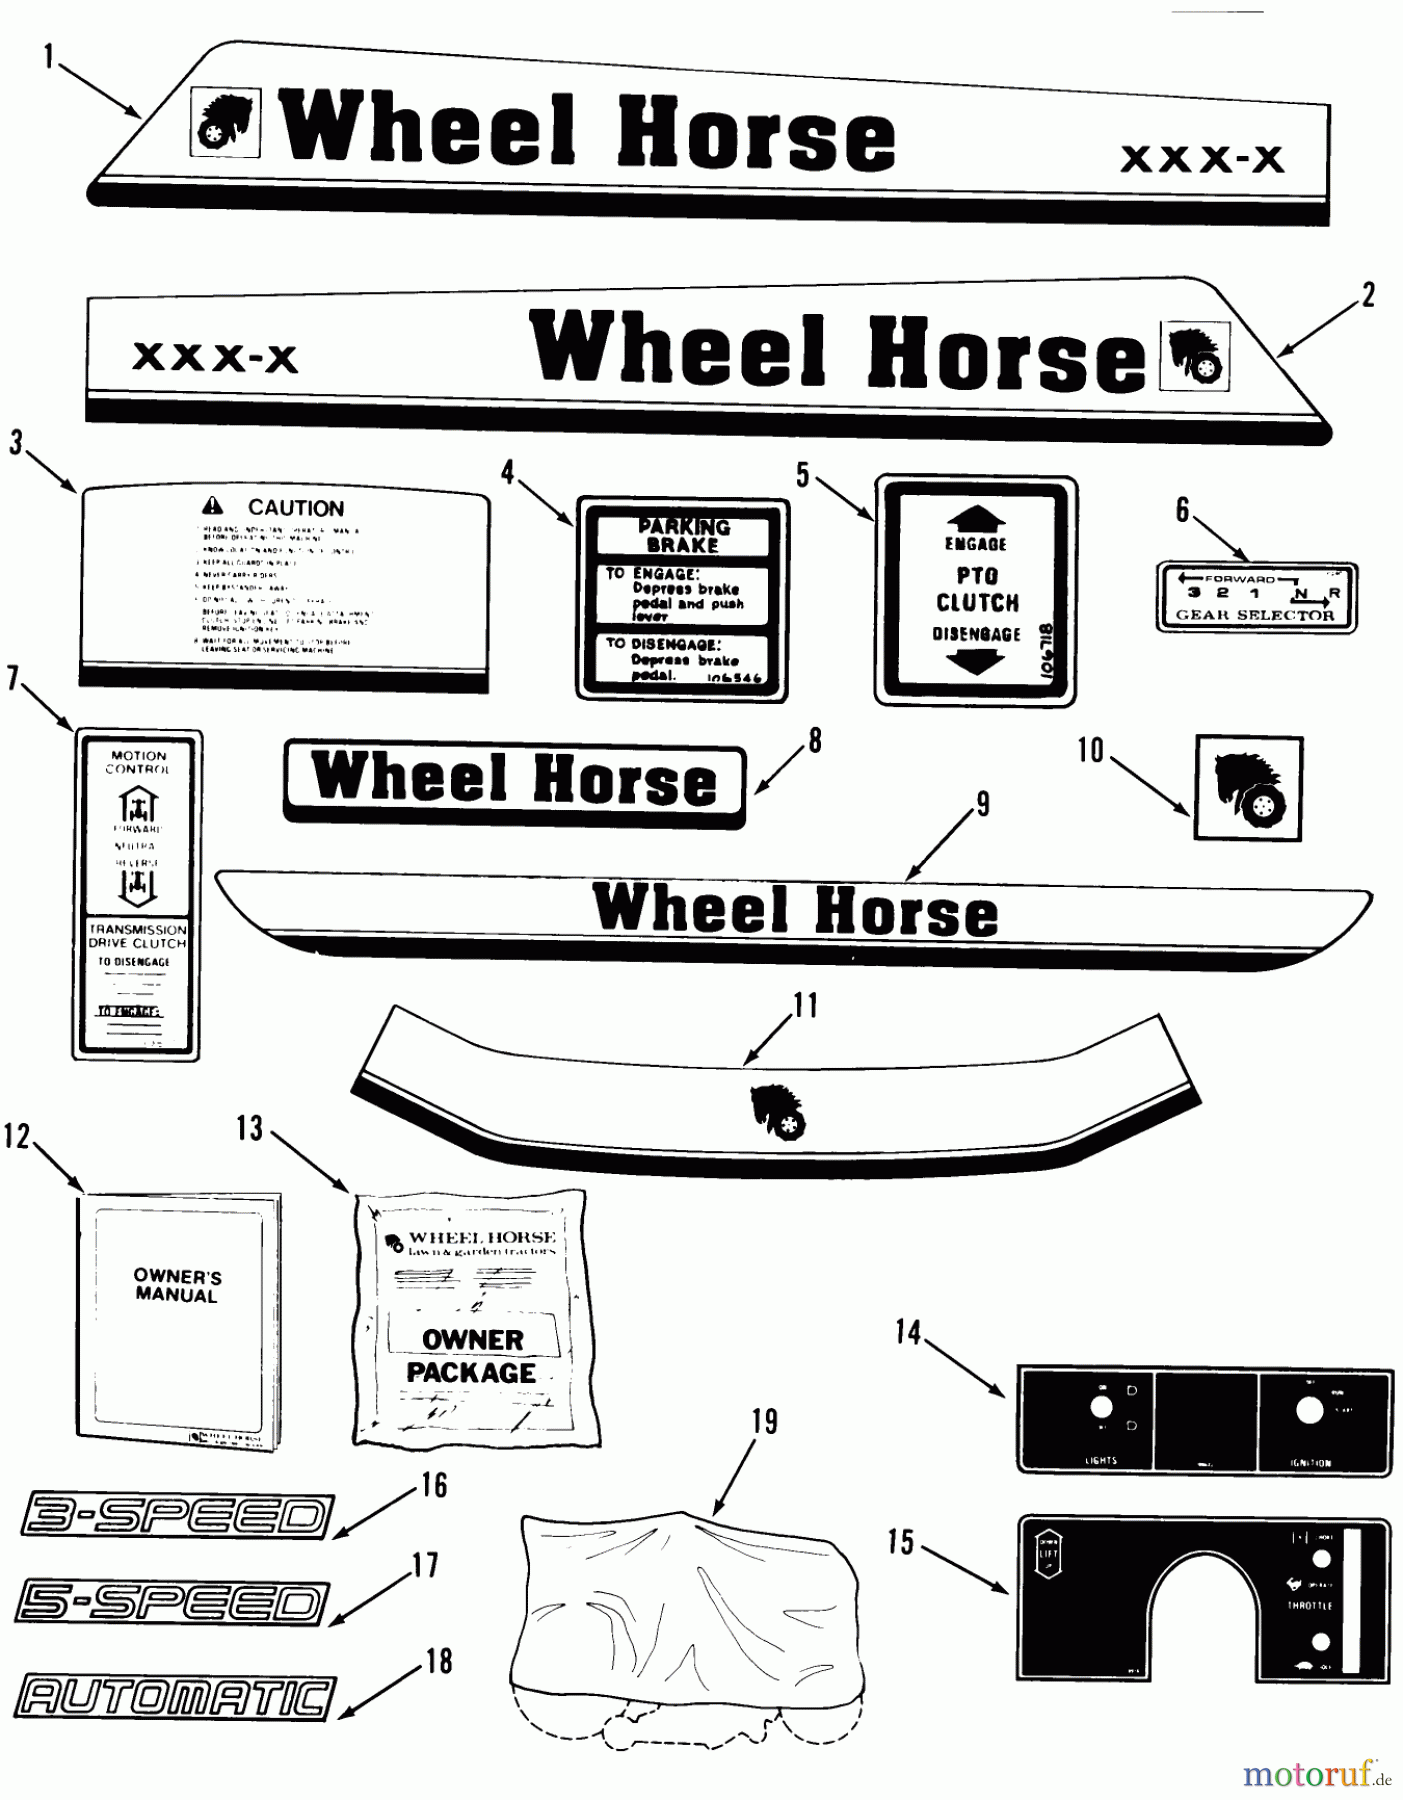  Toro Neu Mowers, Lawn & Garden Tractor Seite 1 22-16B501 (216-5) - Toro 216-5 Tractor, 1985 DECALS, MISCELLANEOUS